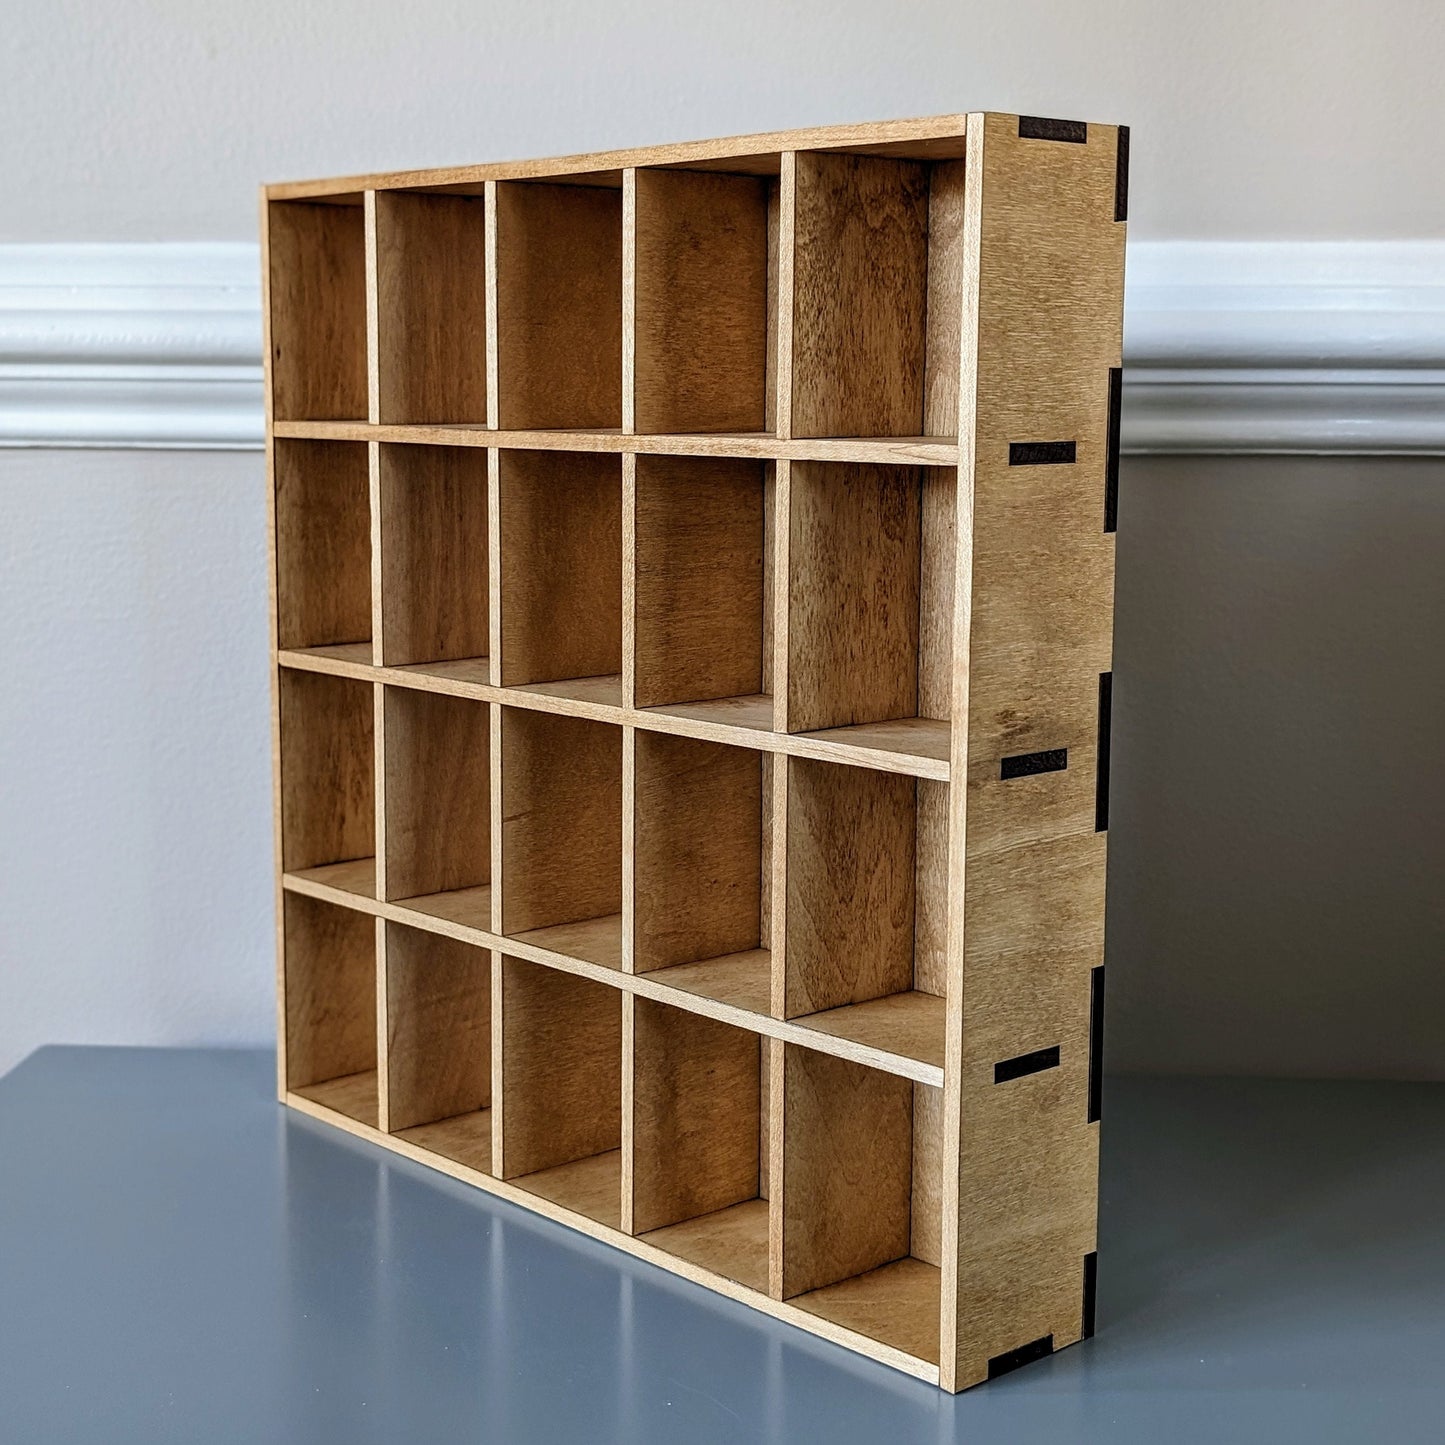 20 Compartment Wooden Display Shelf - Trinket Shelf - Curio Cabinet- Knick Knack Collection Display - Printer Tray -Figure Organizer Display